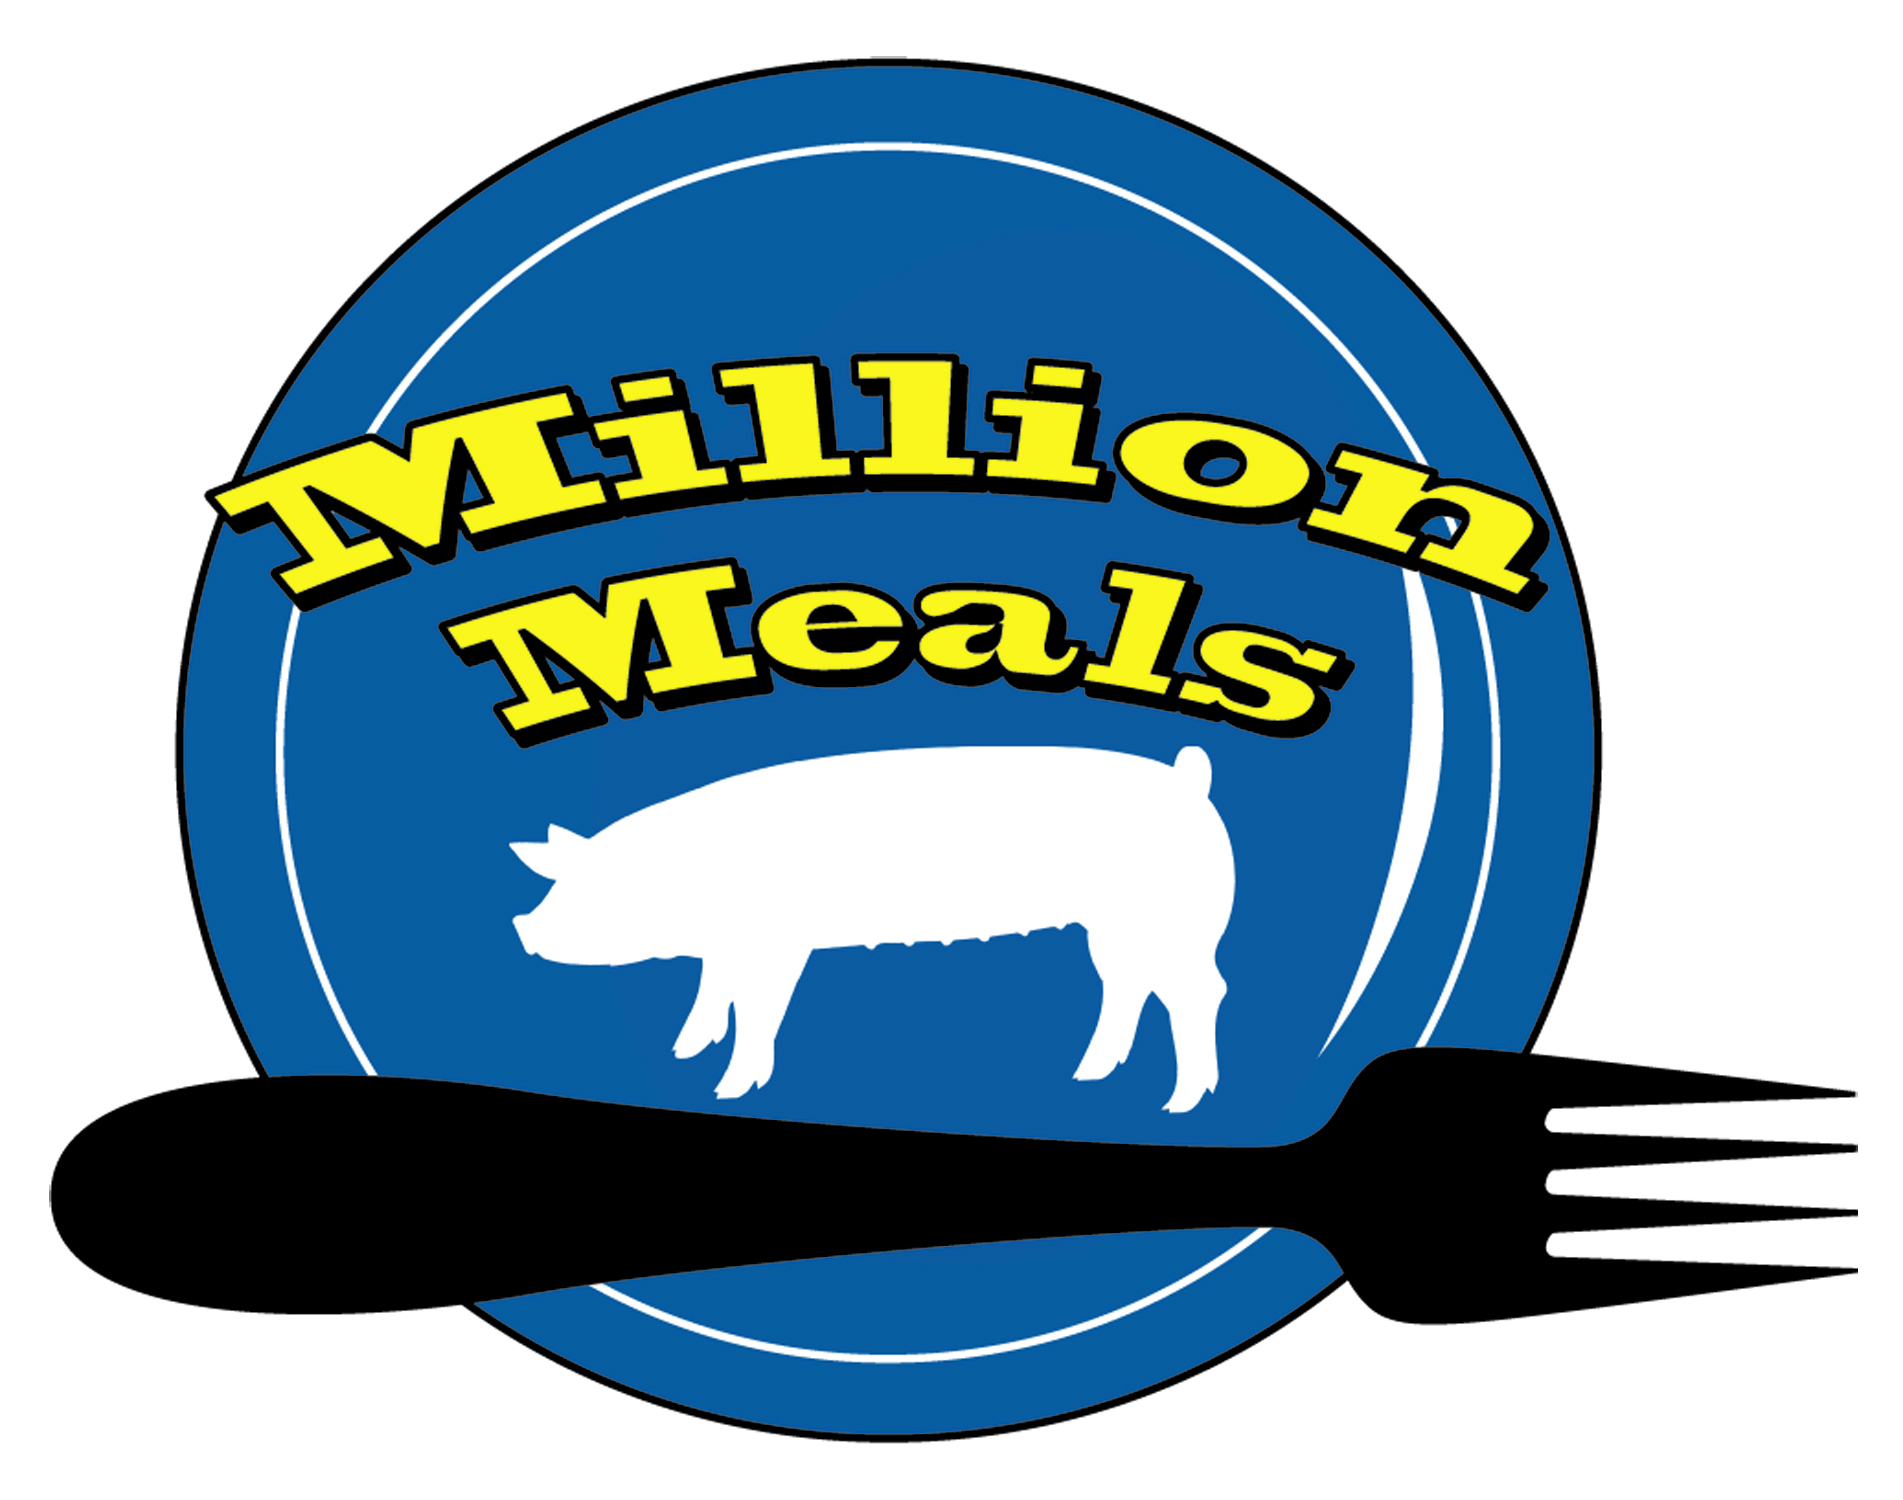 Support the Million Meals Program